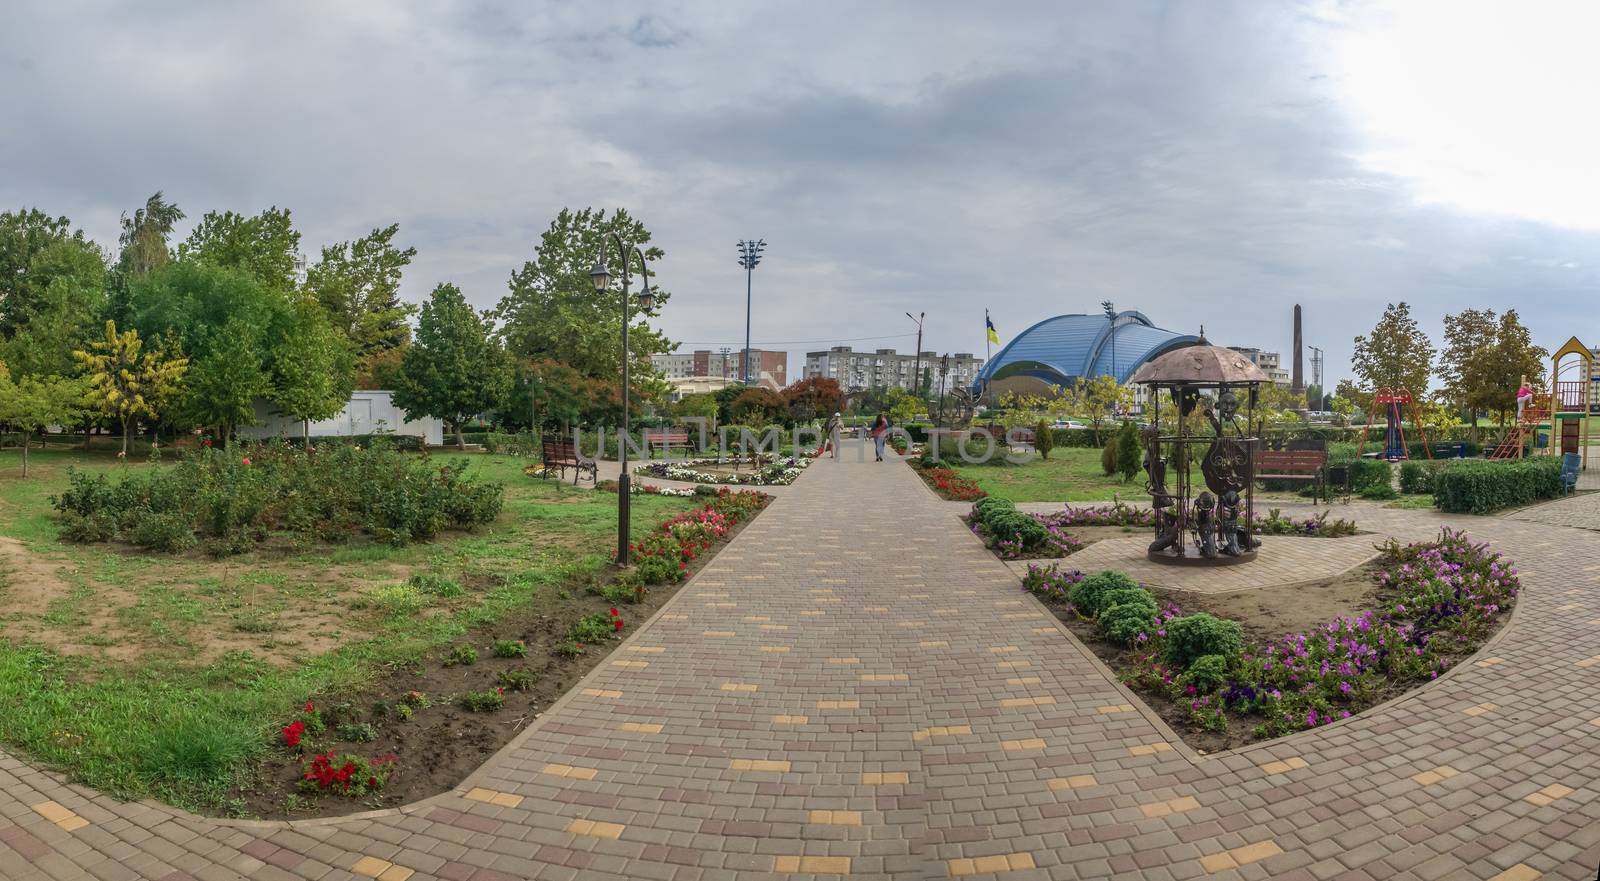 Garden of forged sculptures in Yuzhny city, Ukraine by Multipedia